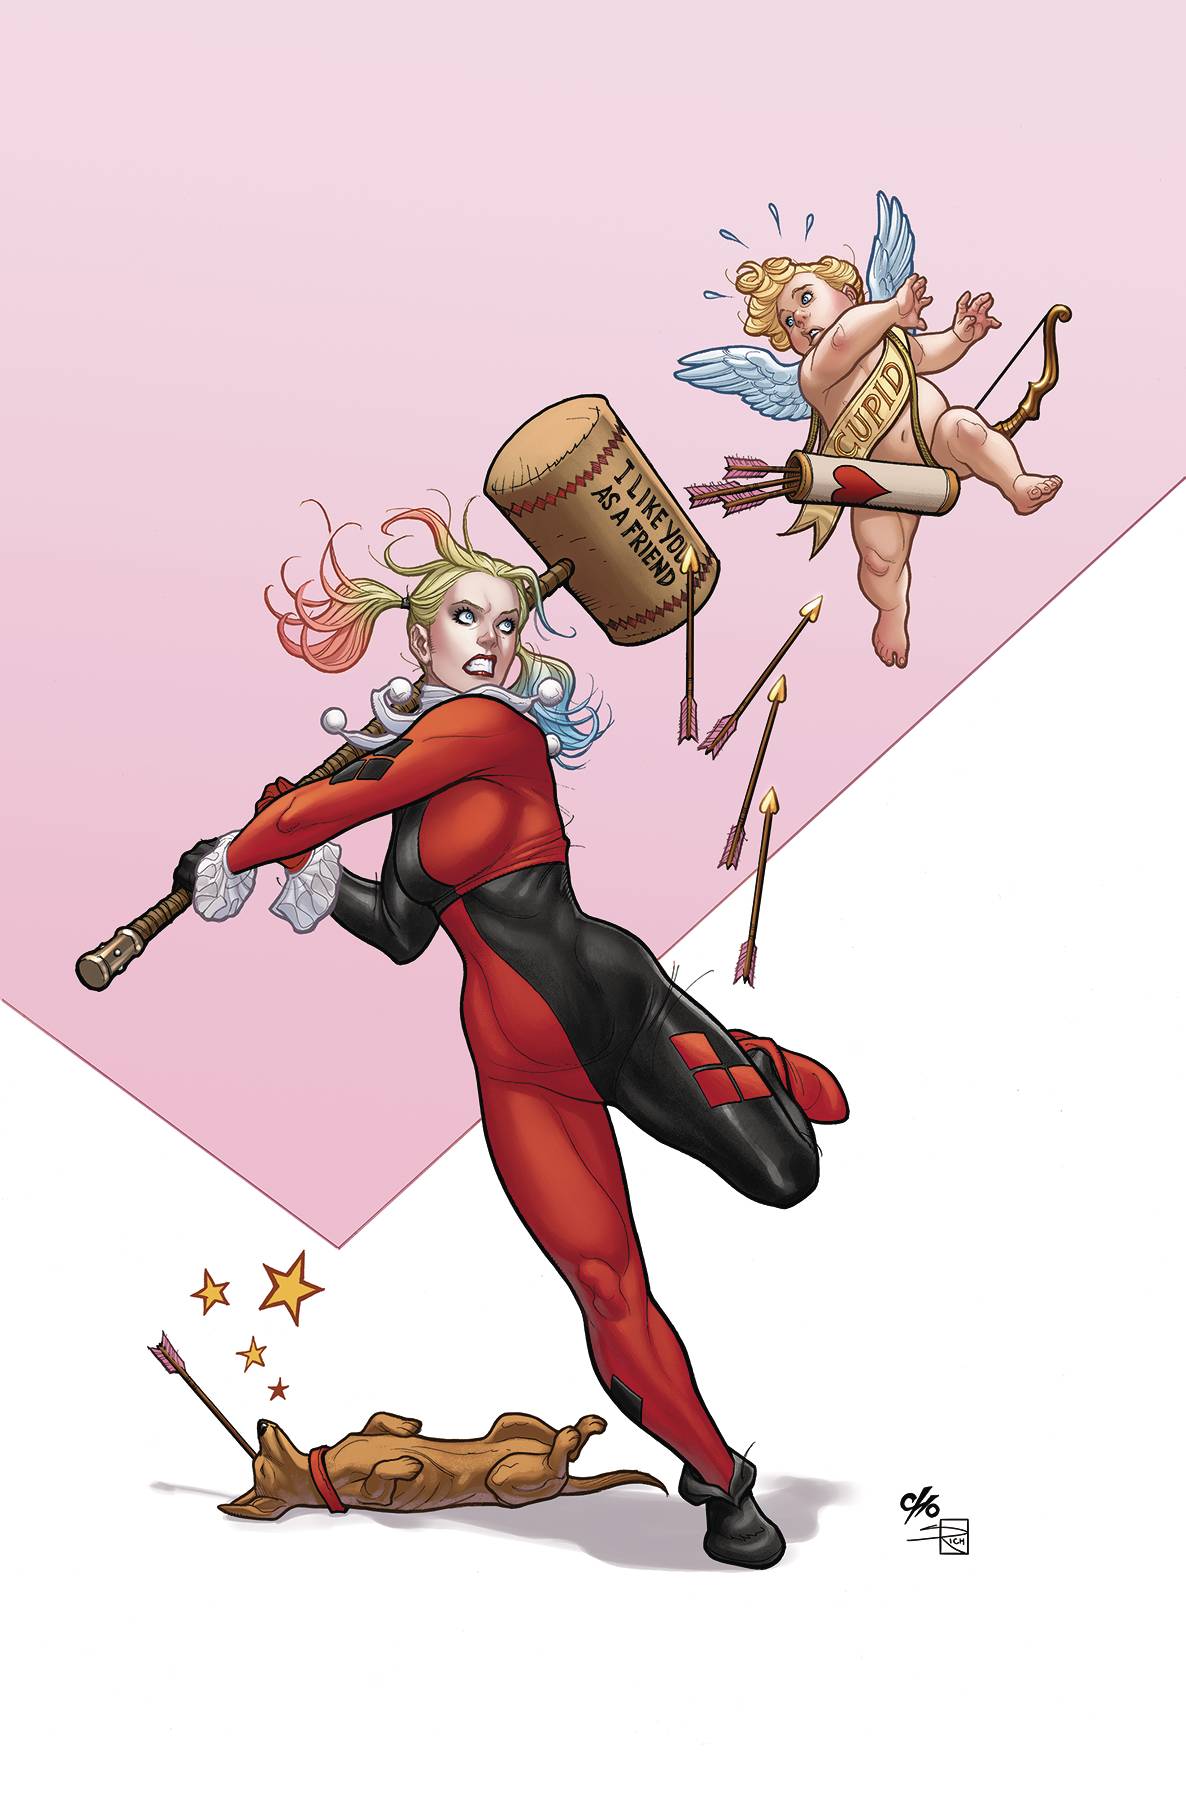 Anime 1186x1800 Frank Cho Harley Quinn hammer humor boobs bodysuit blonde villains dog comics comic art DC Comics